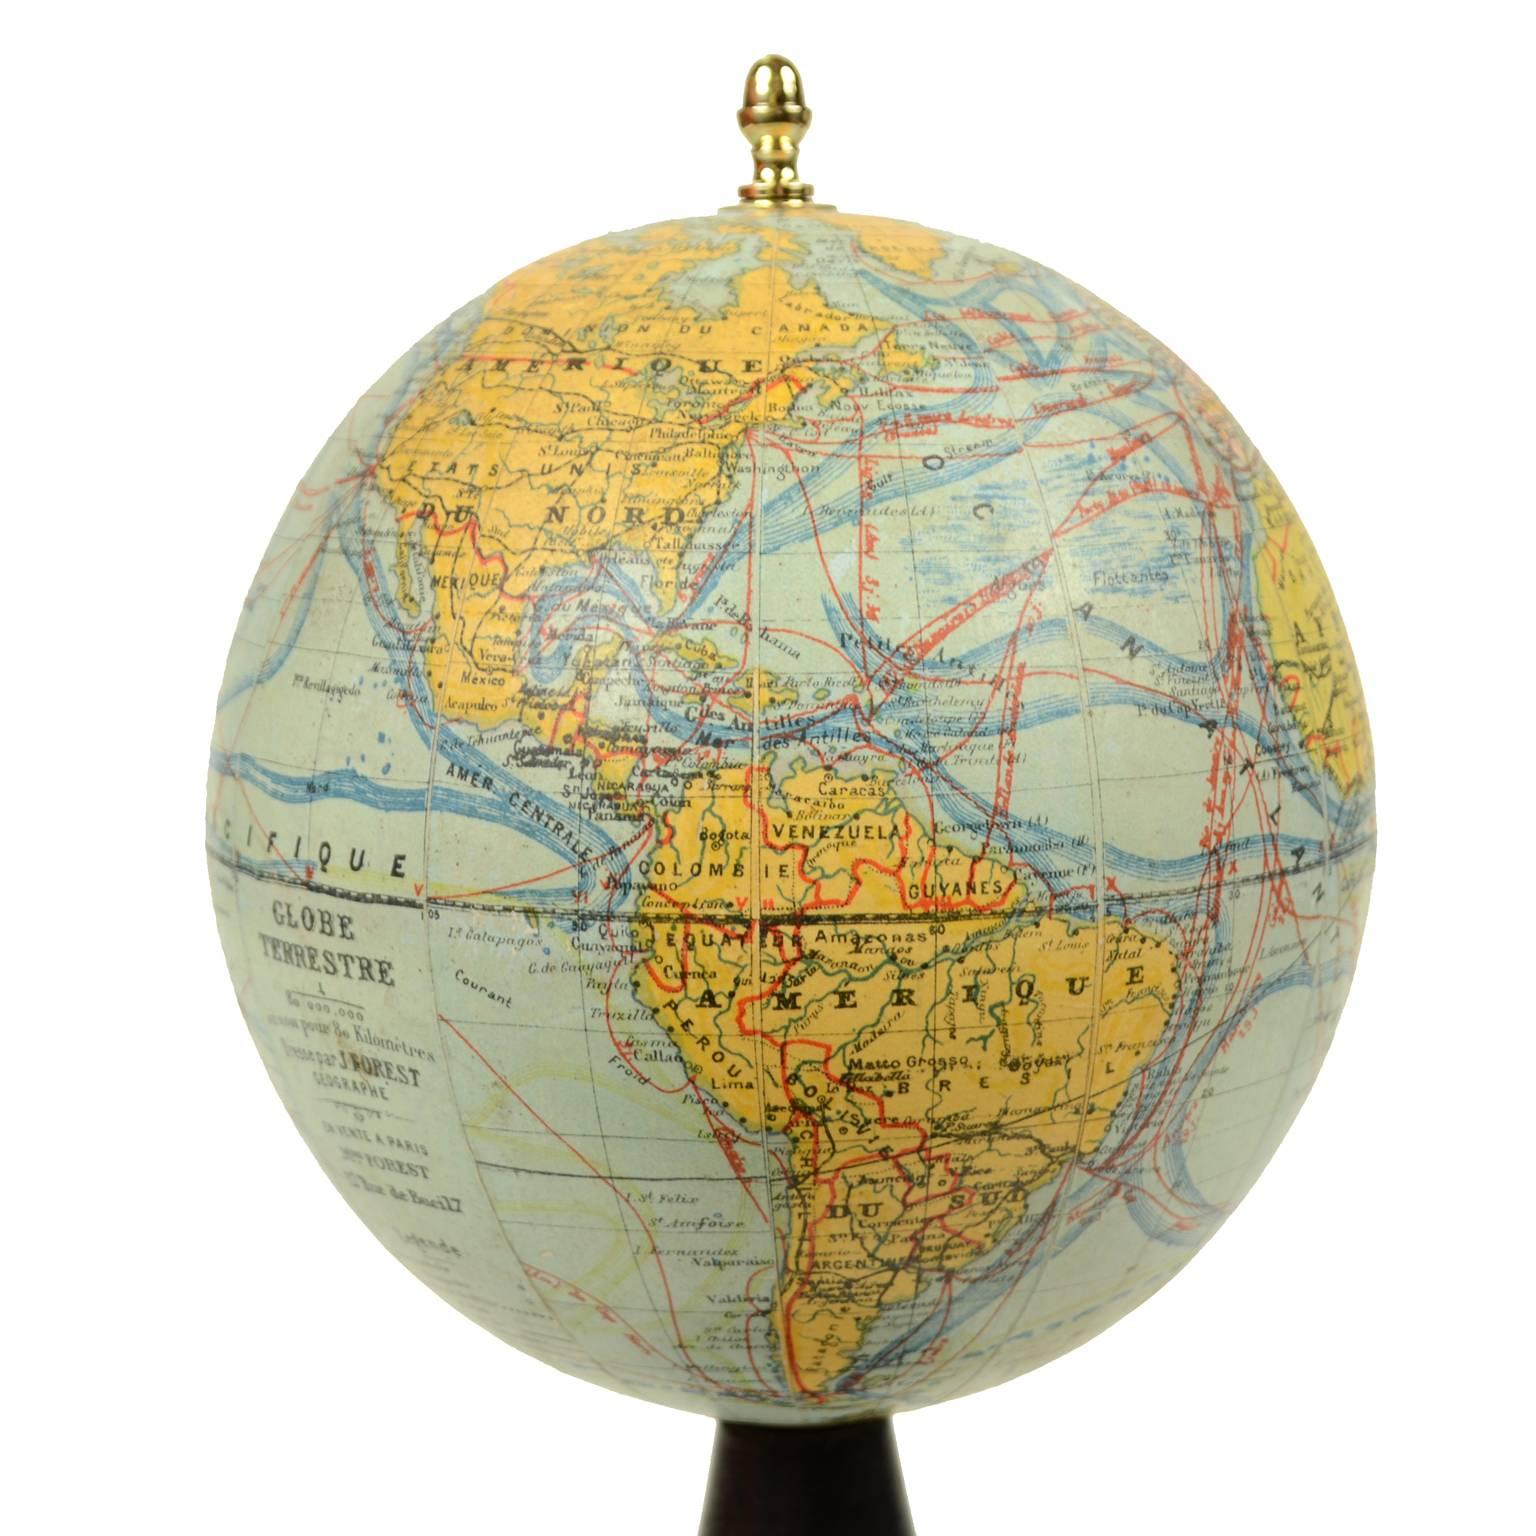 france on a globe